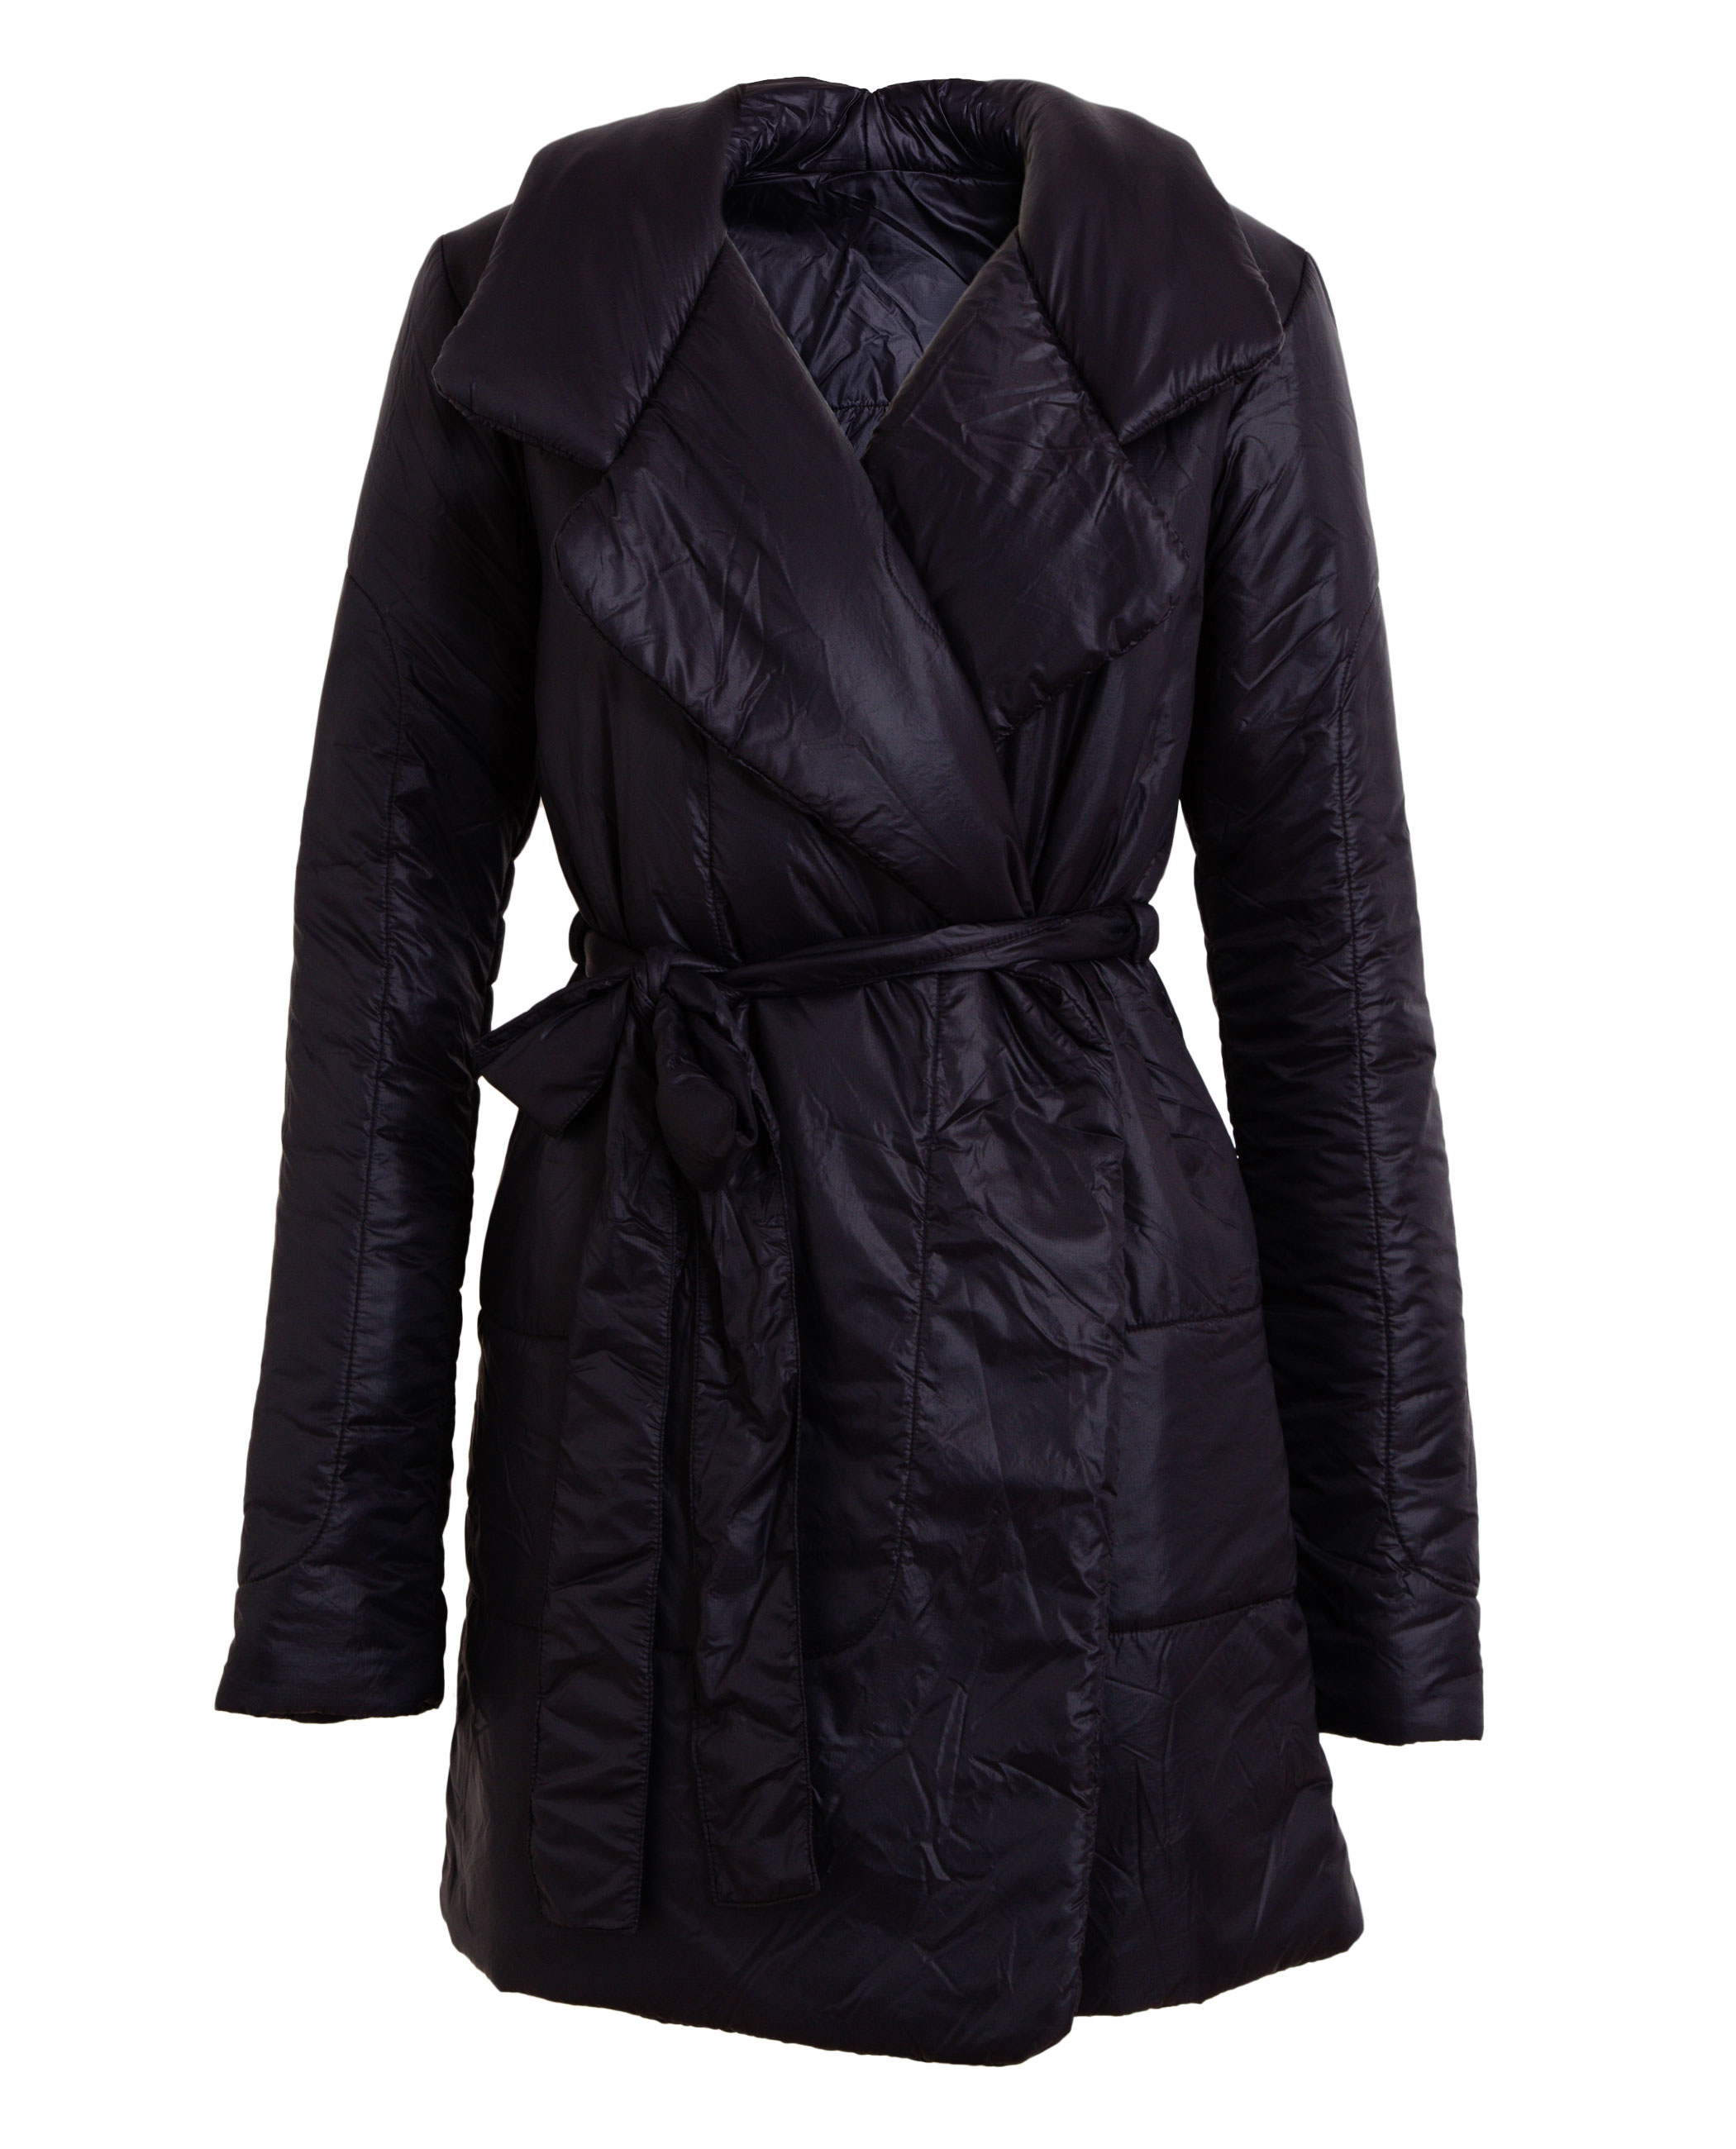 Lyst - Norma Kamali Reversible Sleeping Bag Trench Coat in Black